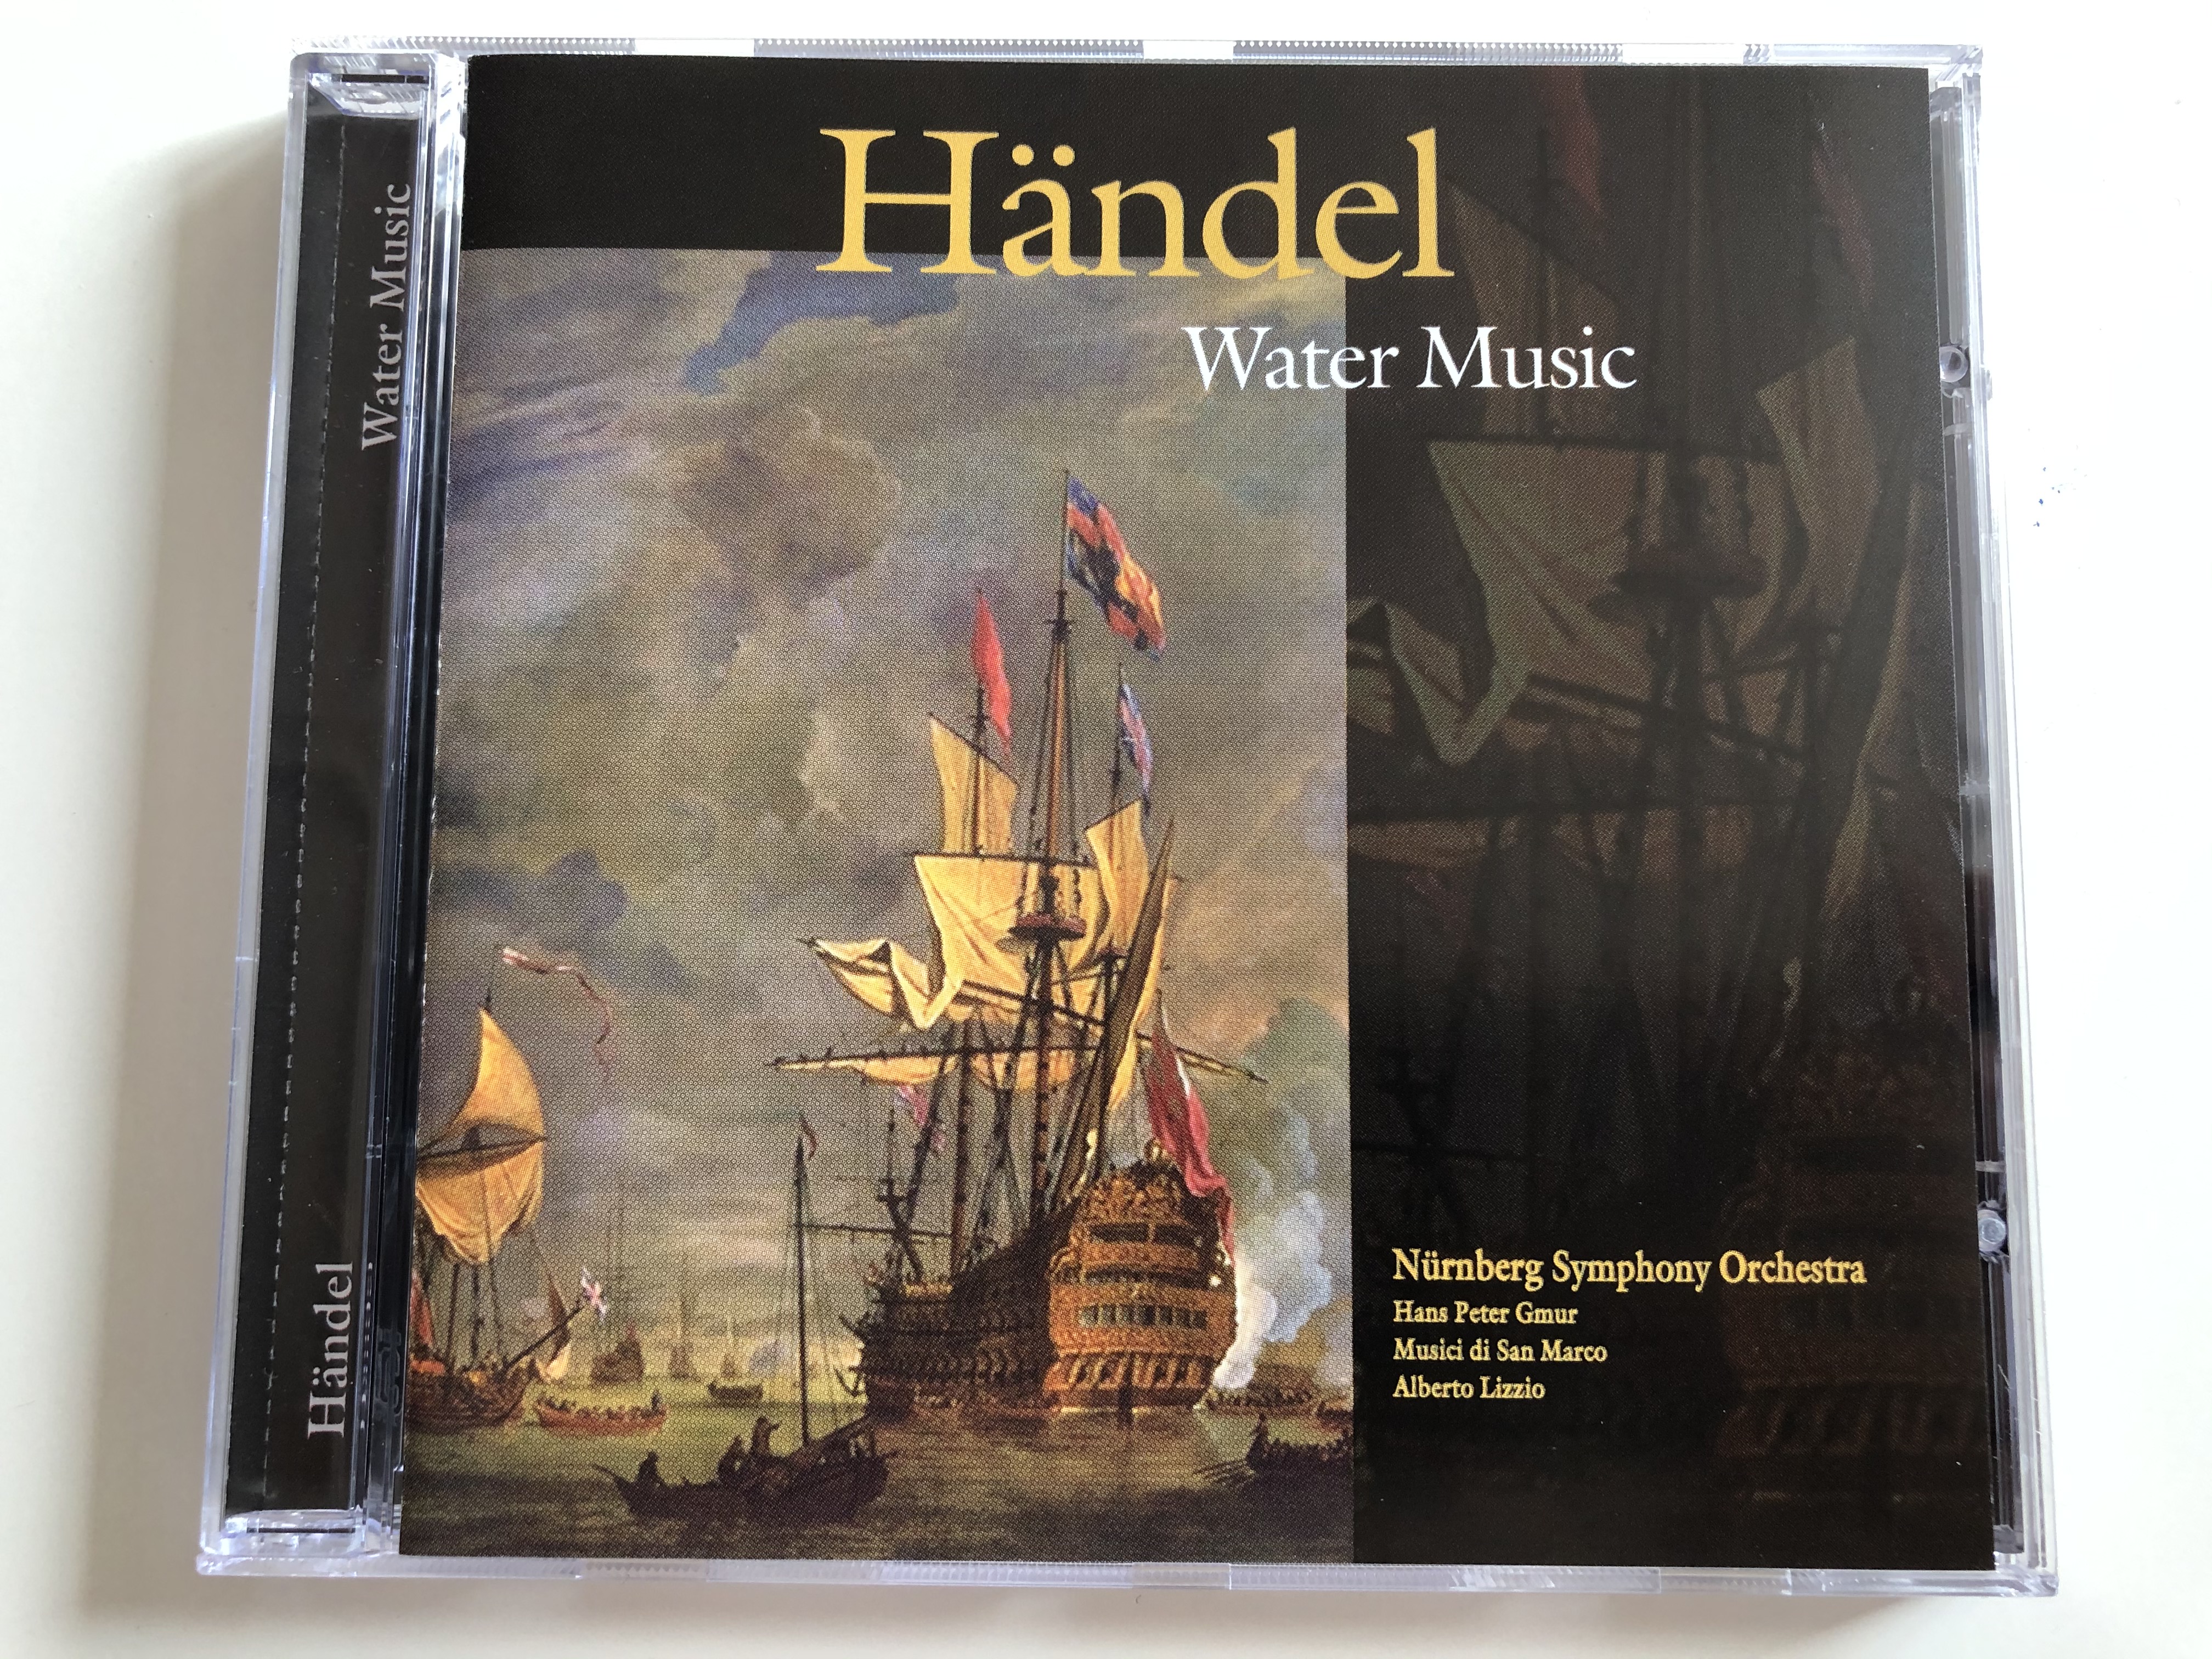 handel-water-music-nurnberg-symphony-orchestra-hans-peter-gmur-musici-di-san-marco-alberto-lizzio-a-play-classics-audio-cd-1998-9002-2-1-.jpg